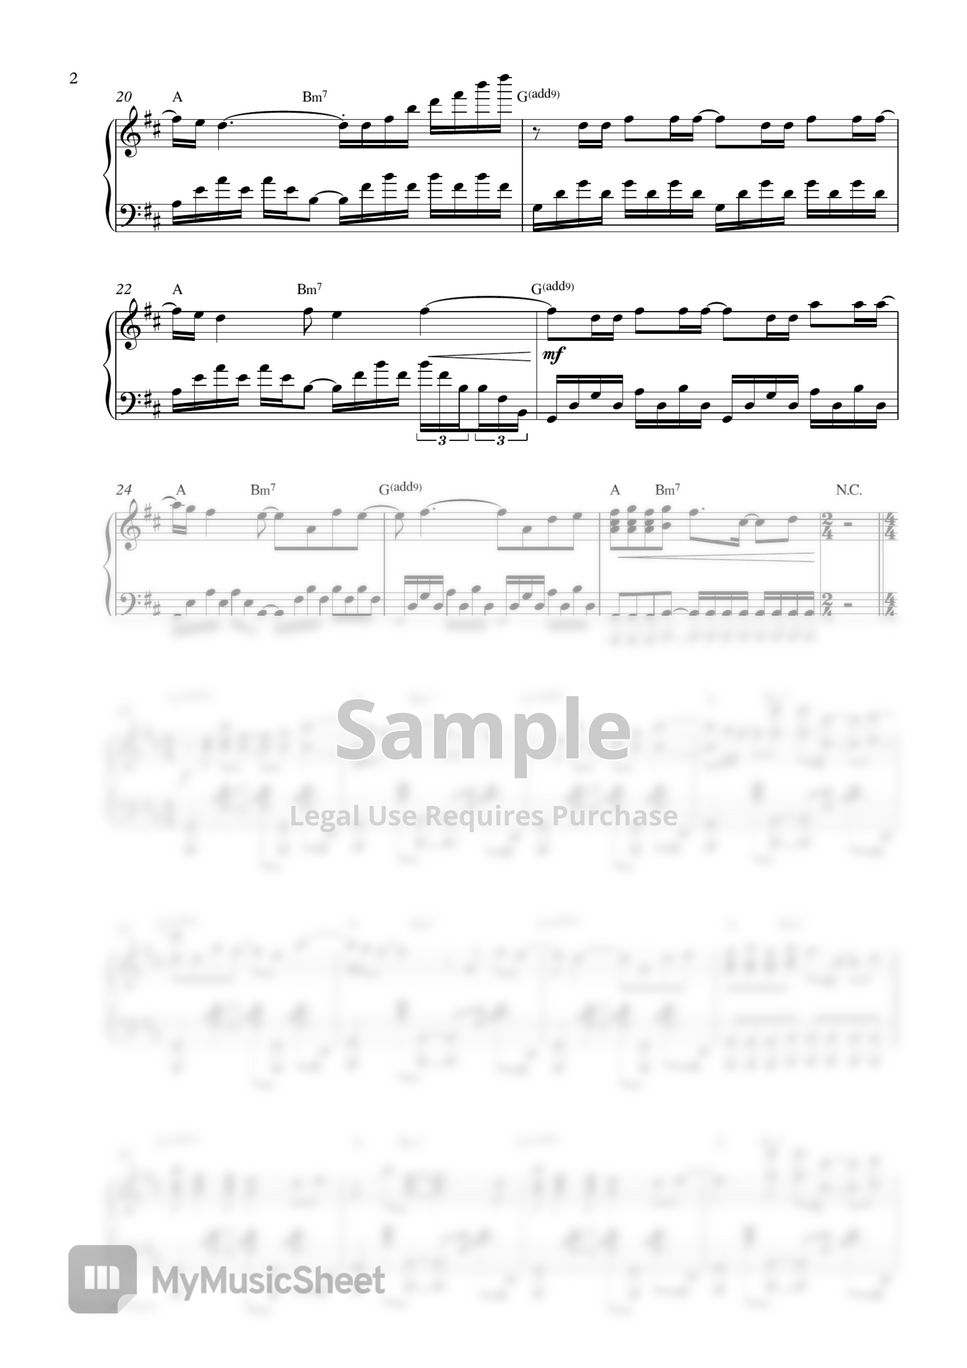 BTS Jungkook - Euphoria (Piano Sheet) by Pianella Piano